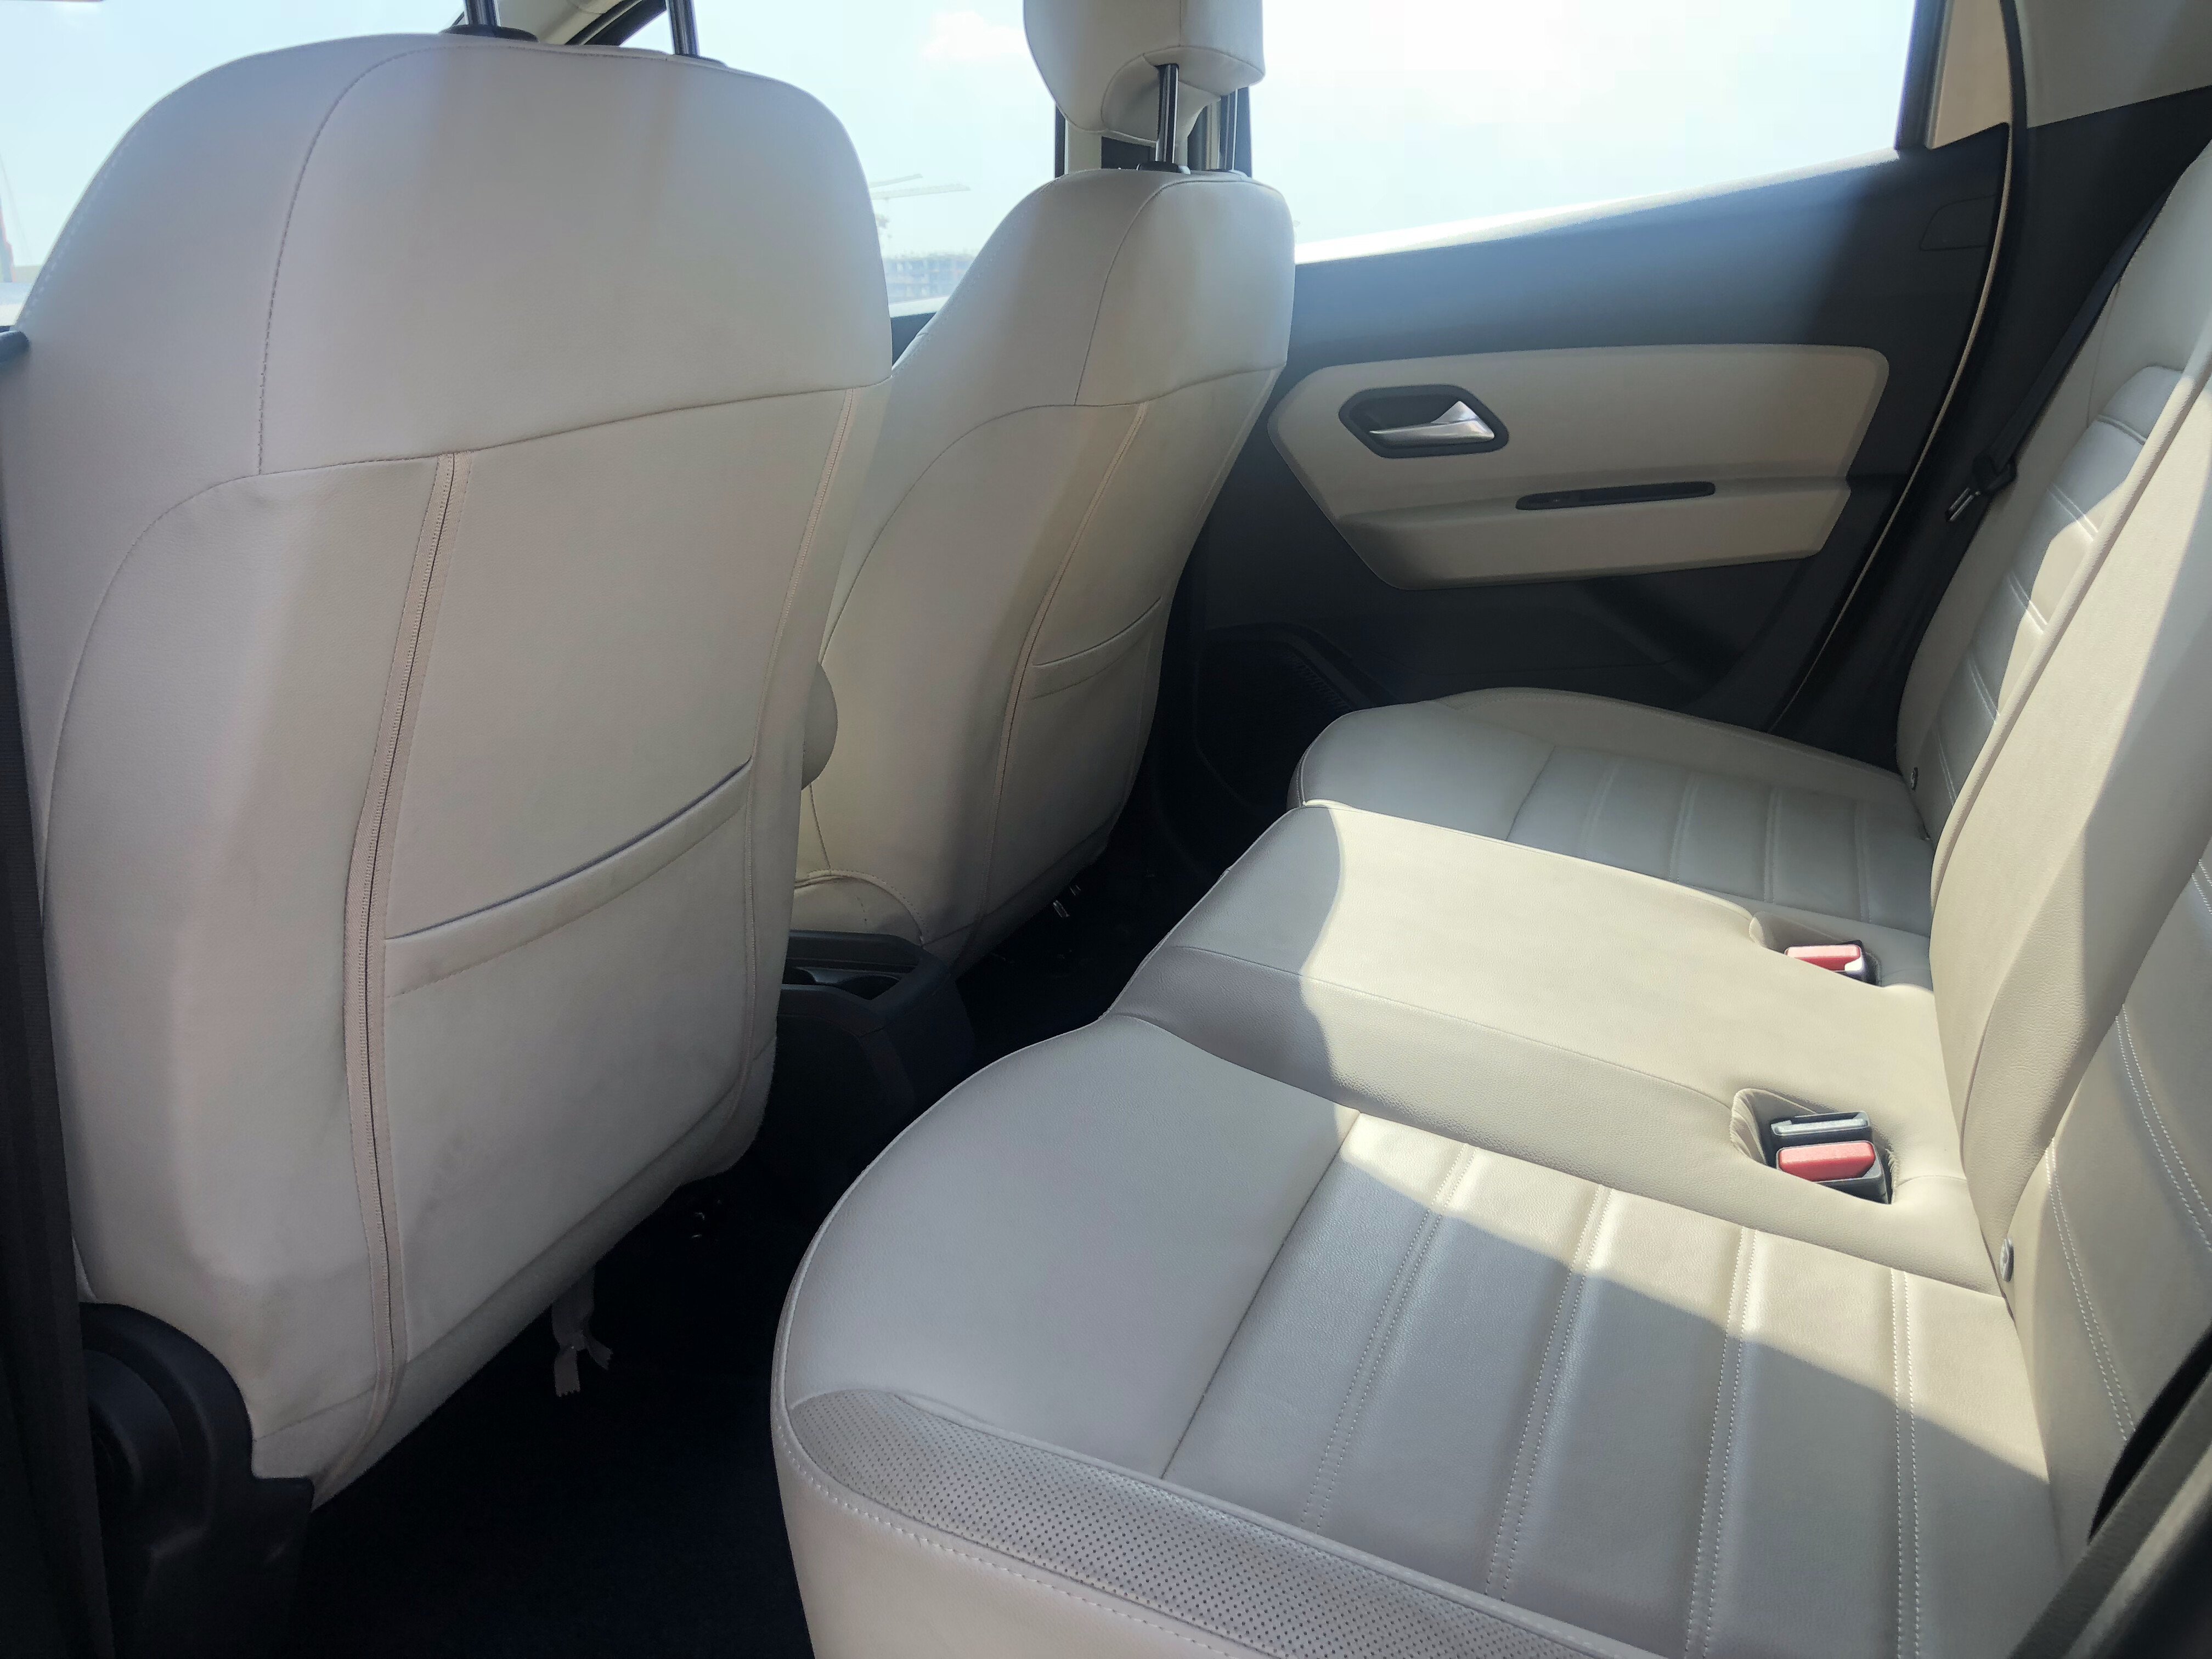 Renault Duster Car Interior Seats